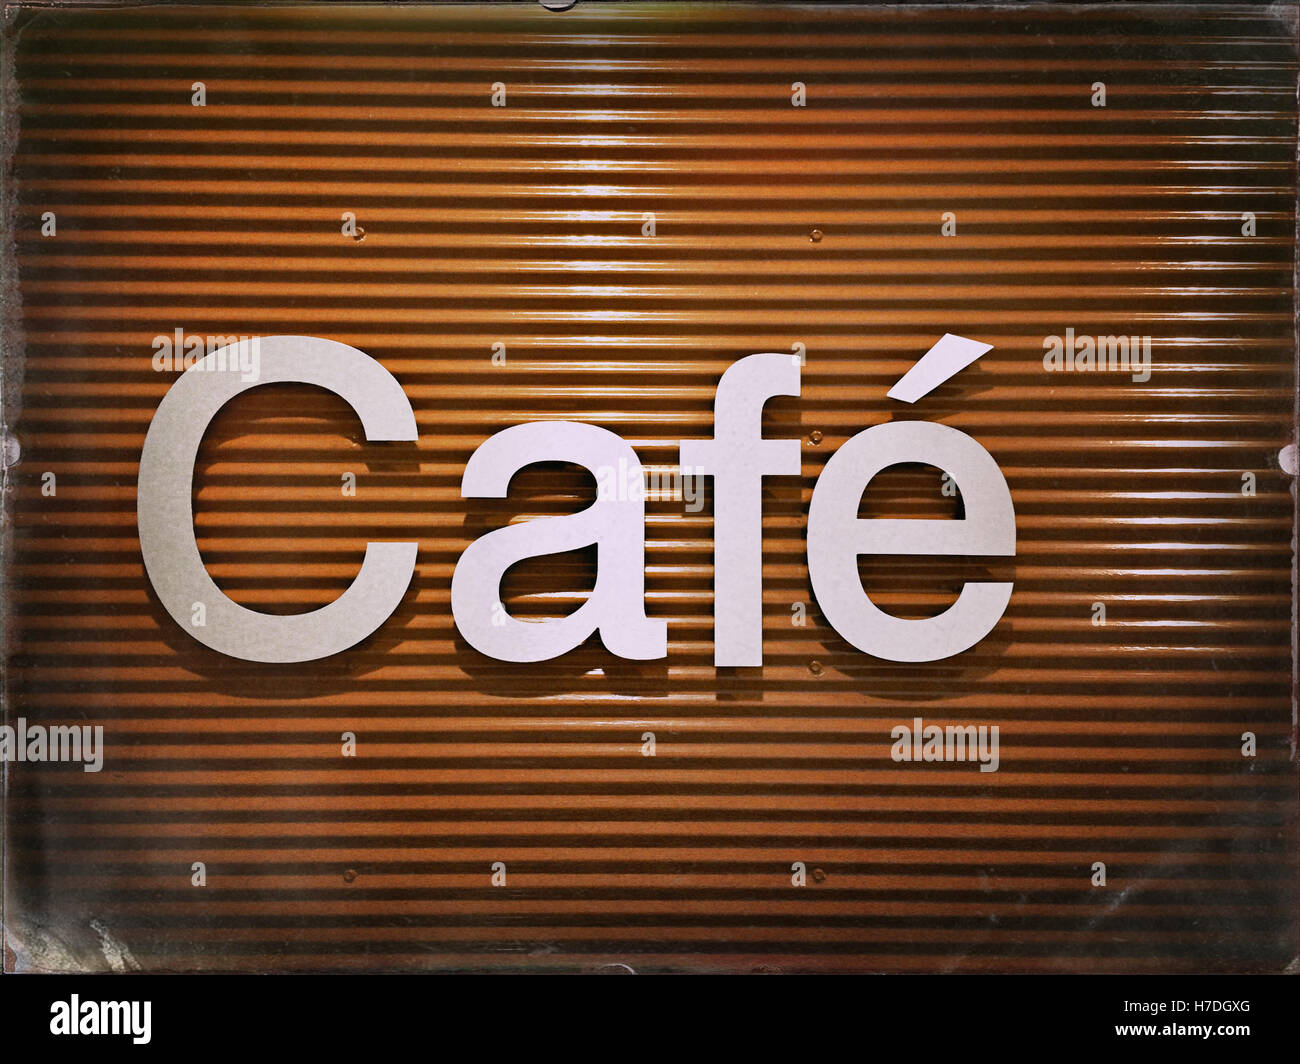 Stylish café sign on orange metal background closeup. Image has vintage effect. Stock Photo